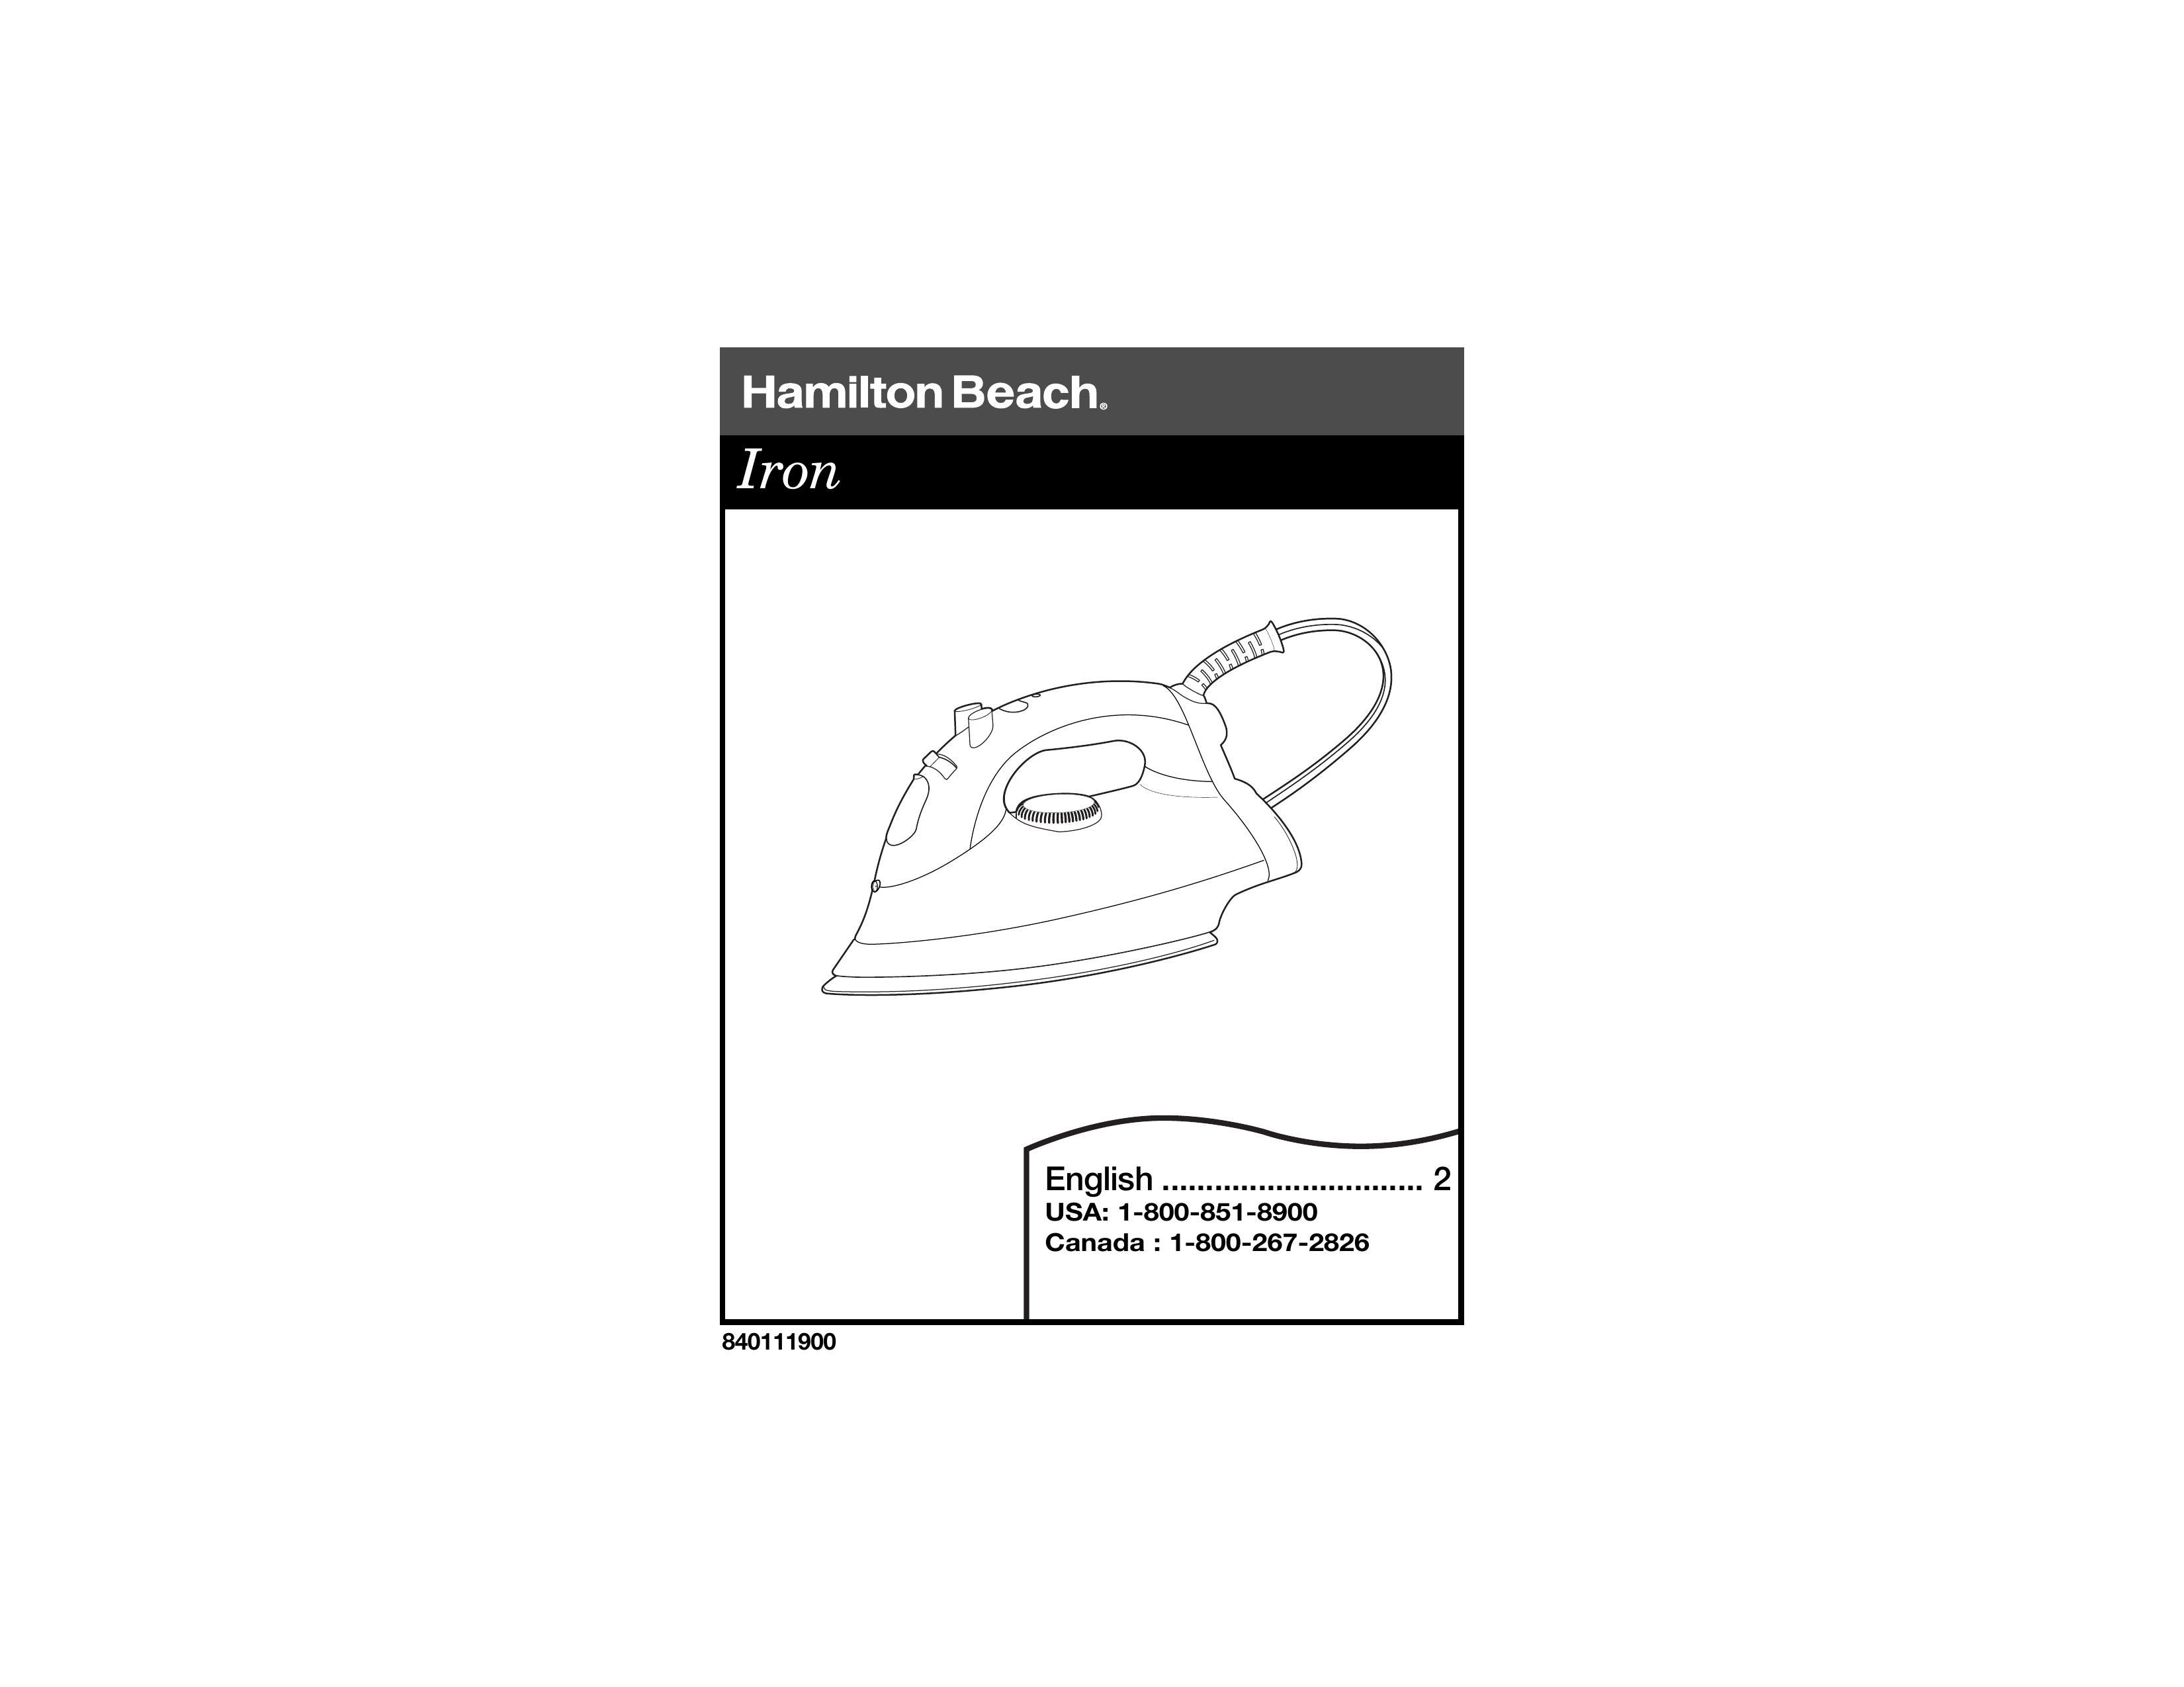 Hamilton Beach 840111900 Iron User Manual